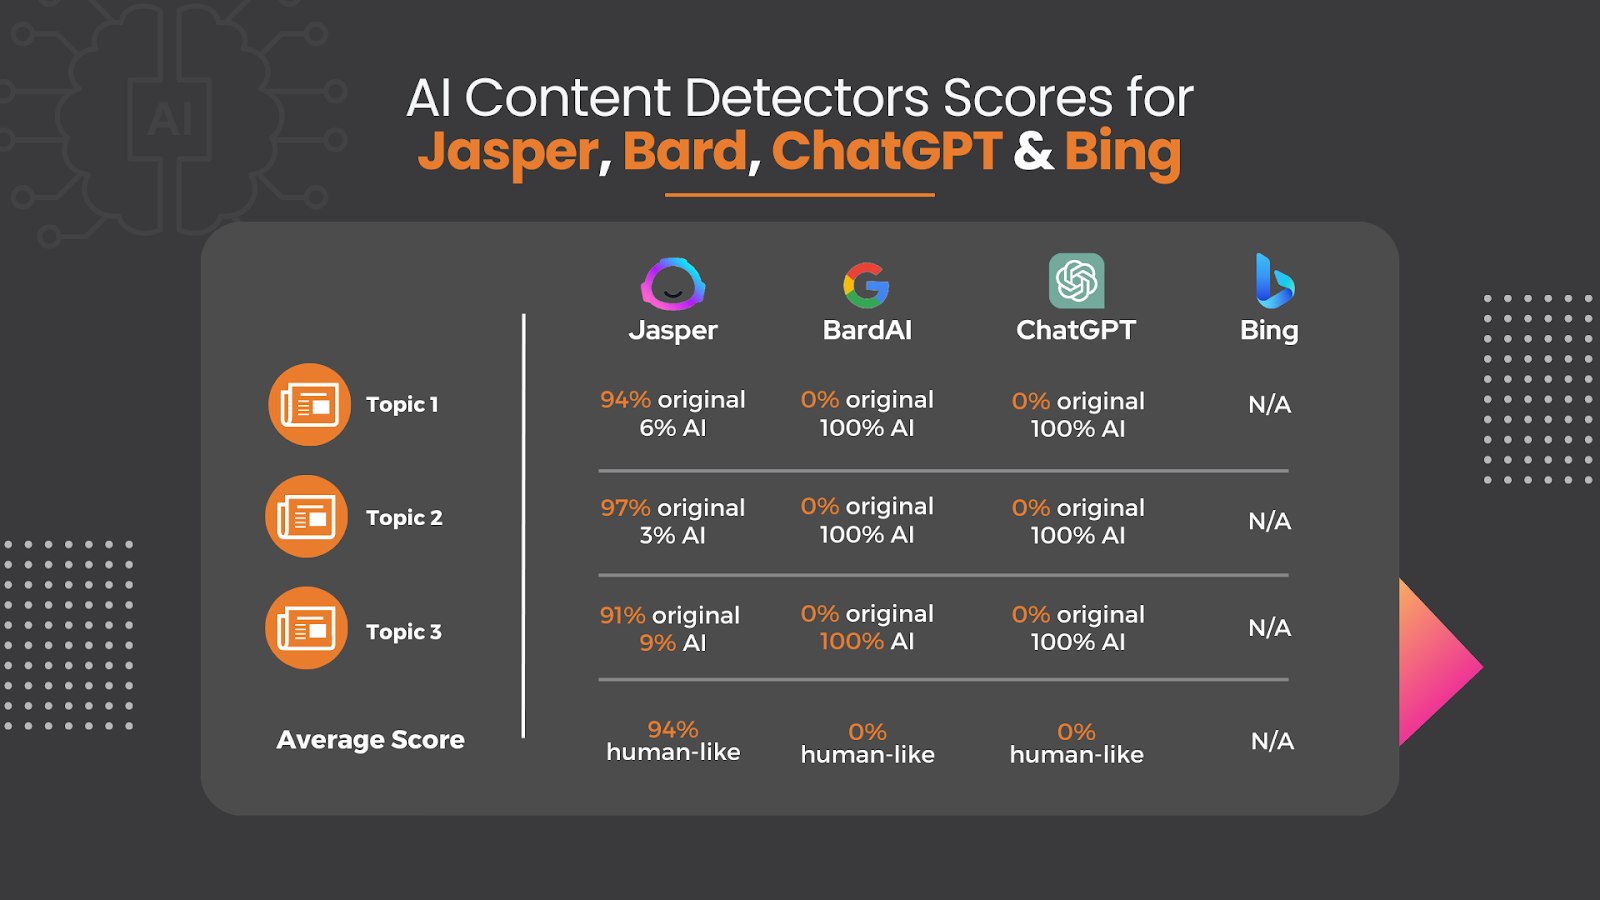 detectors scores for Jasper, Bard, ChatGPT, and Bing